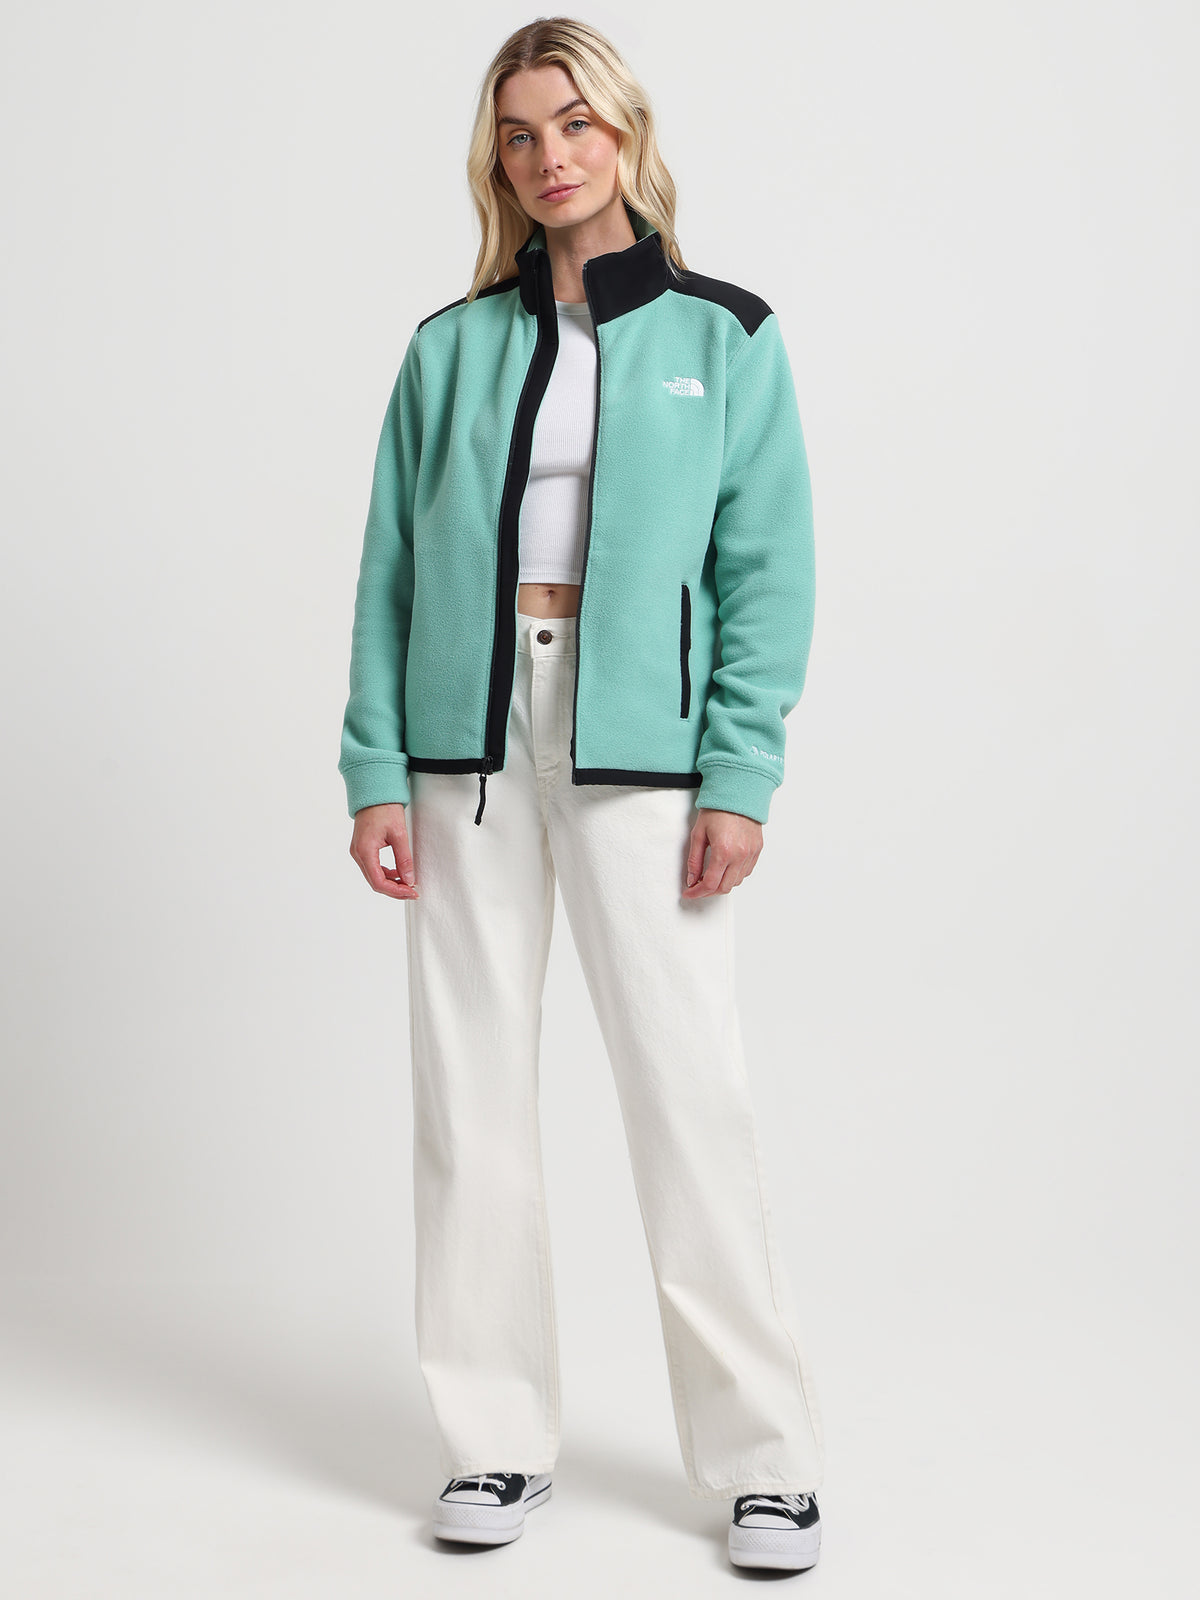 Alpine Polartec® 200 Fleece Full-Zip Jacket in Wasabi Green